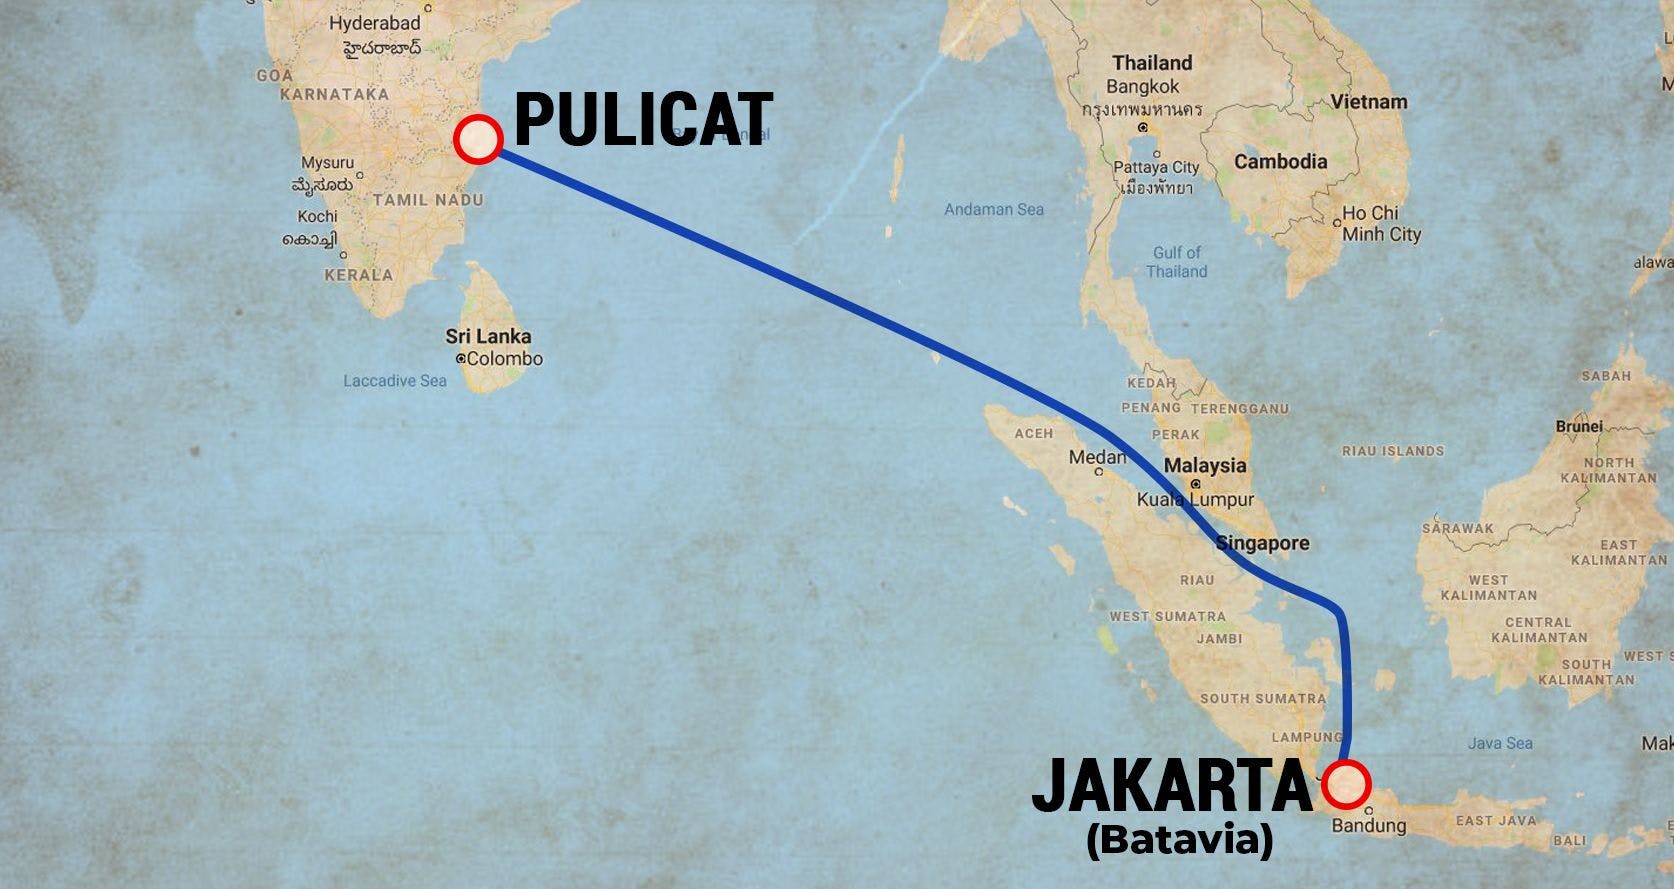 Location of Pulicat and Batavia